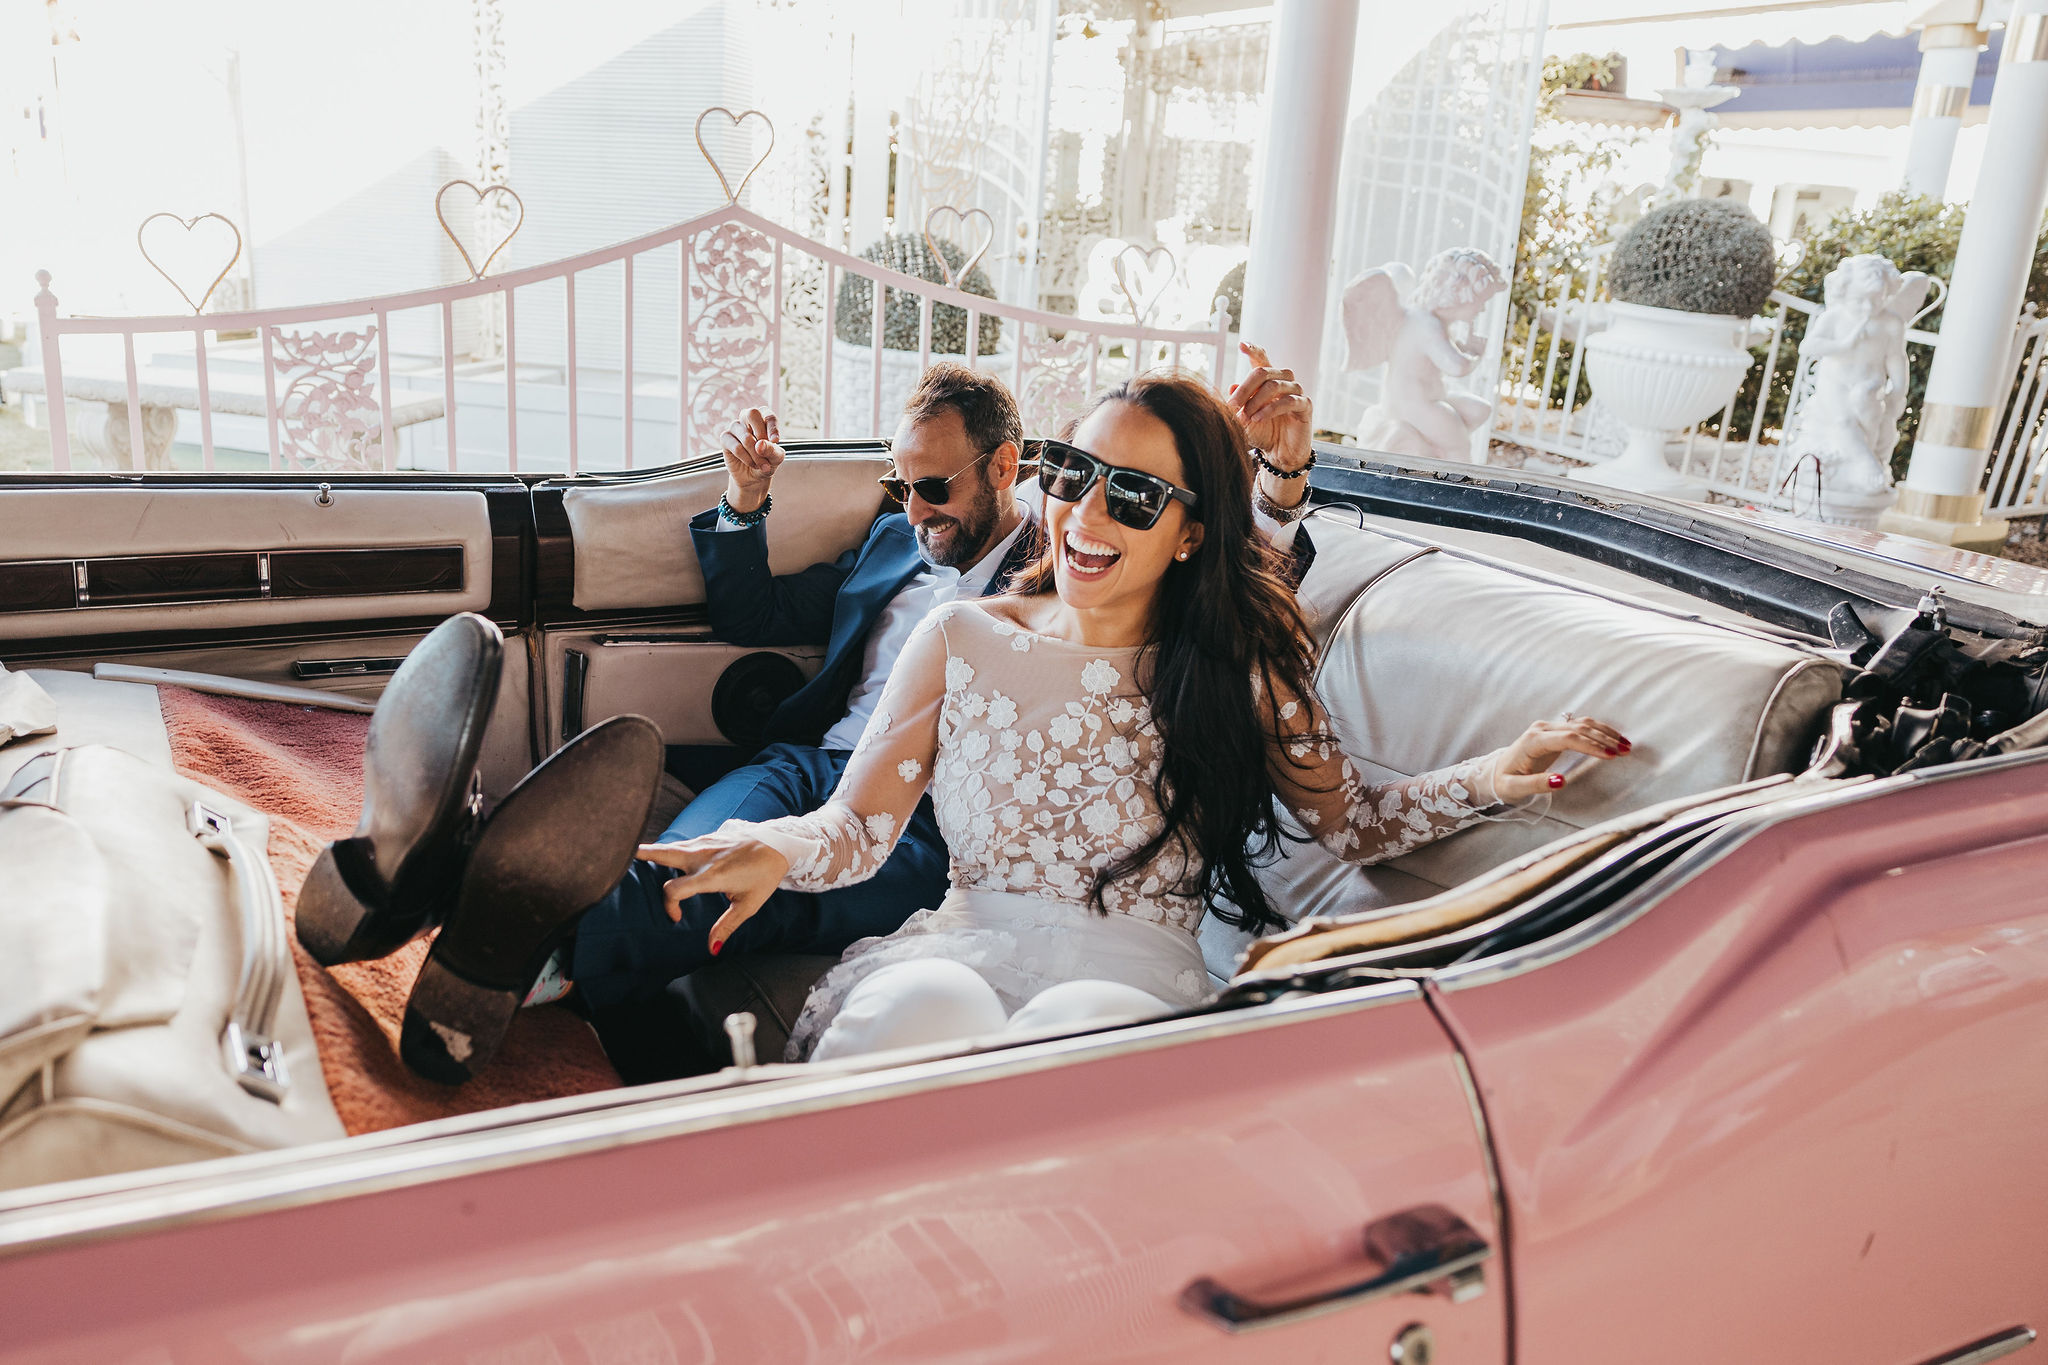 Couple celebrating elopement in vintage car